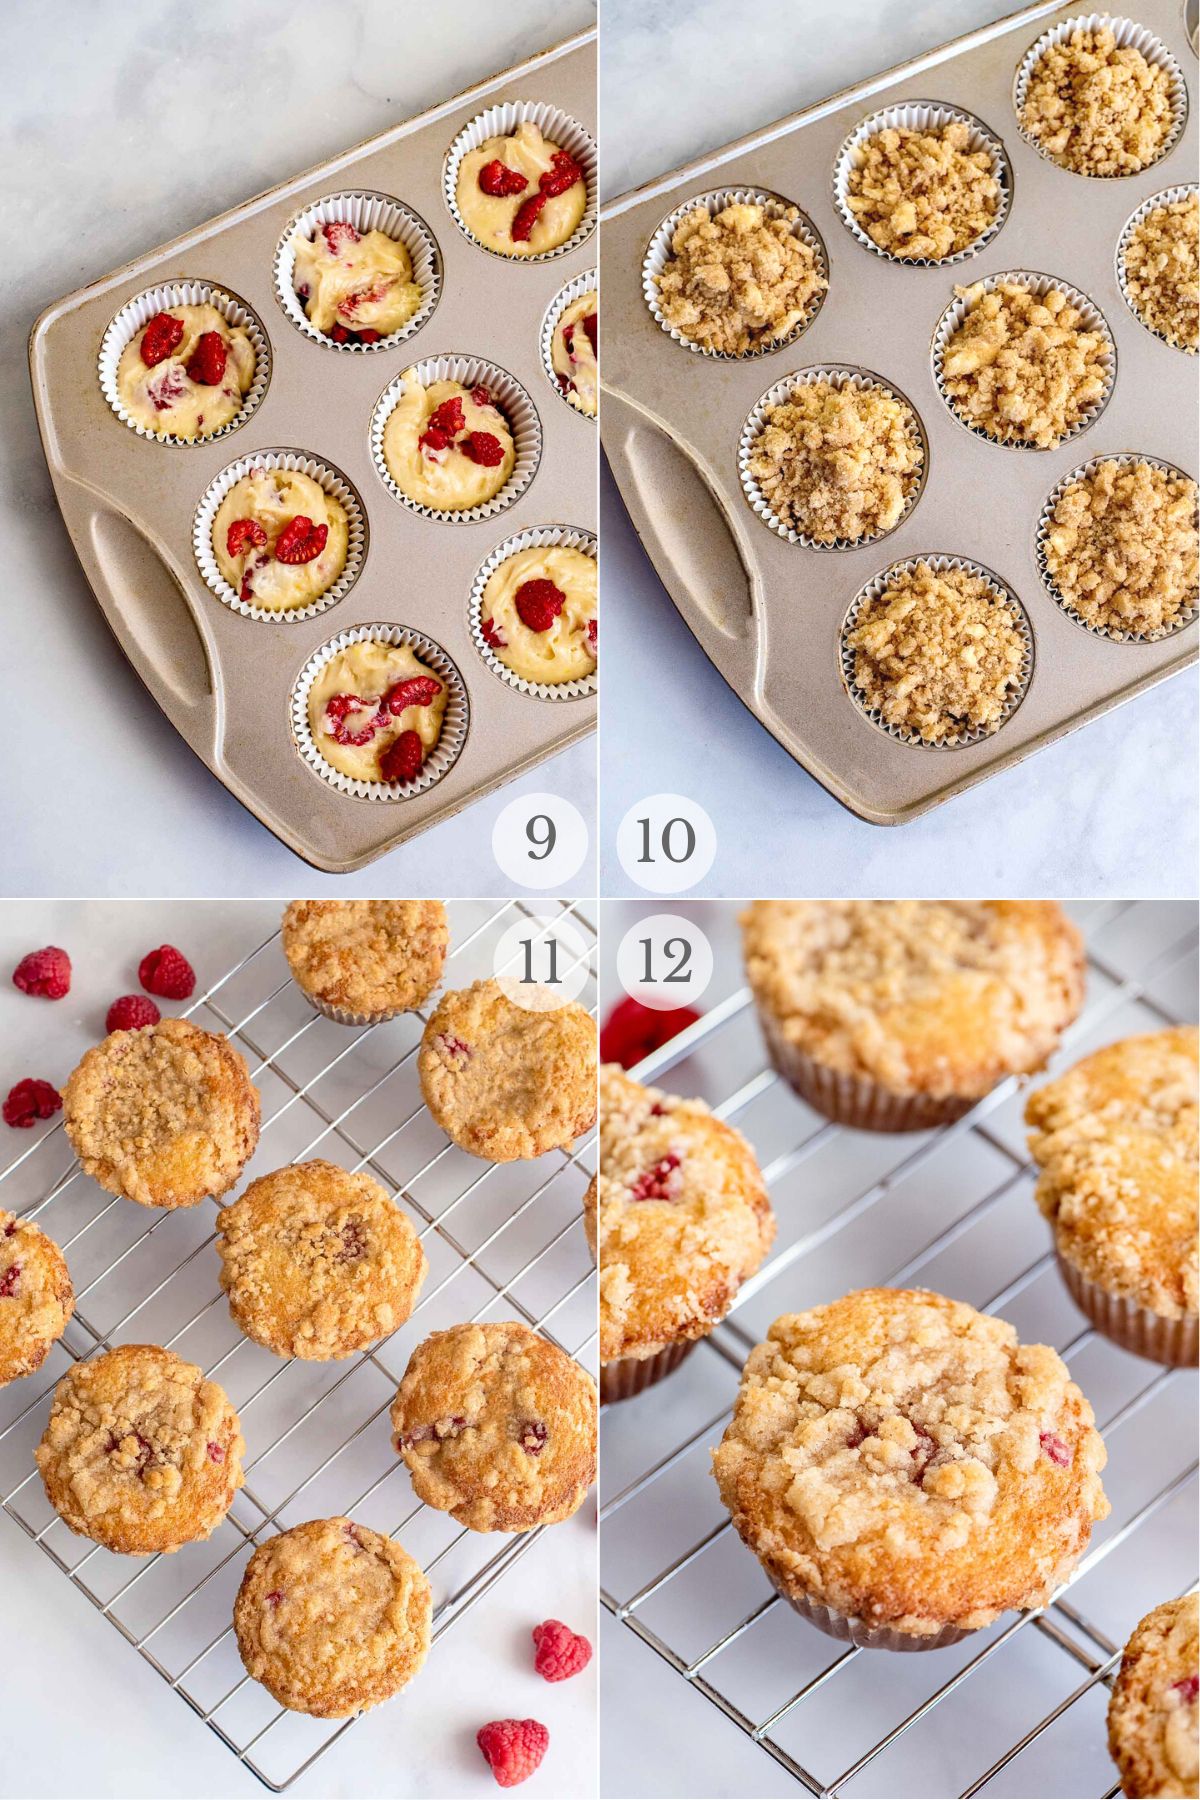 raspberry muffins recipe steps 9-12.